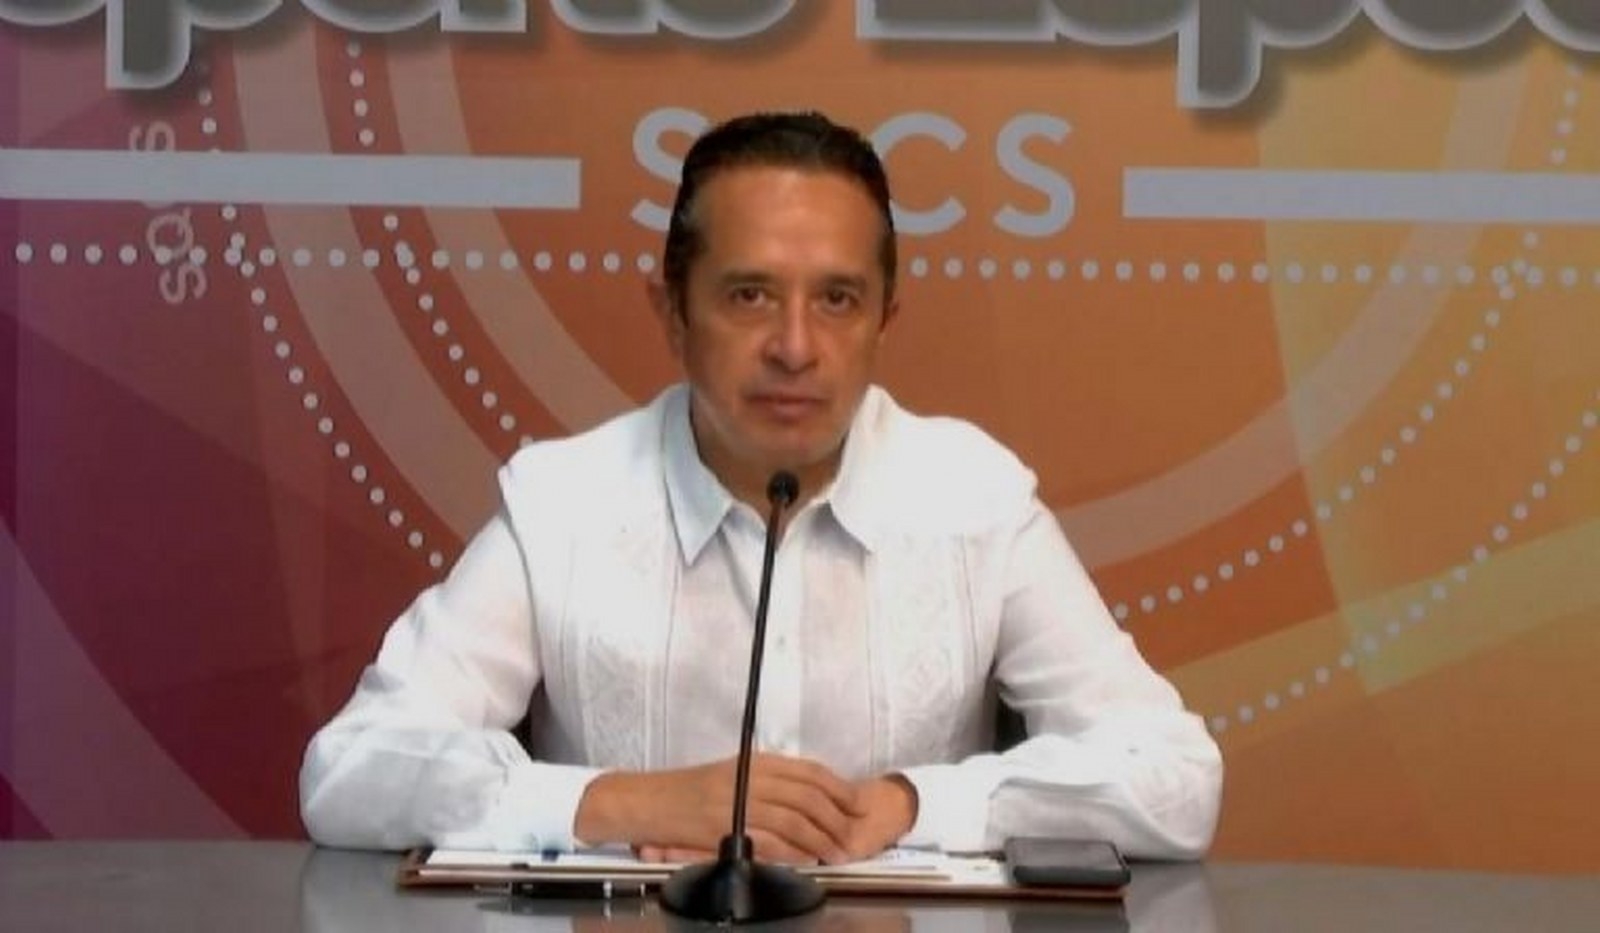 Hacienda acusa a Carlos Joaquín de ocultar uso de recursos públicos de Quintana Roo